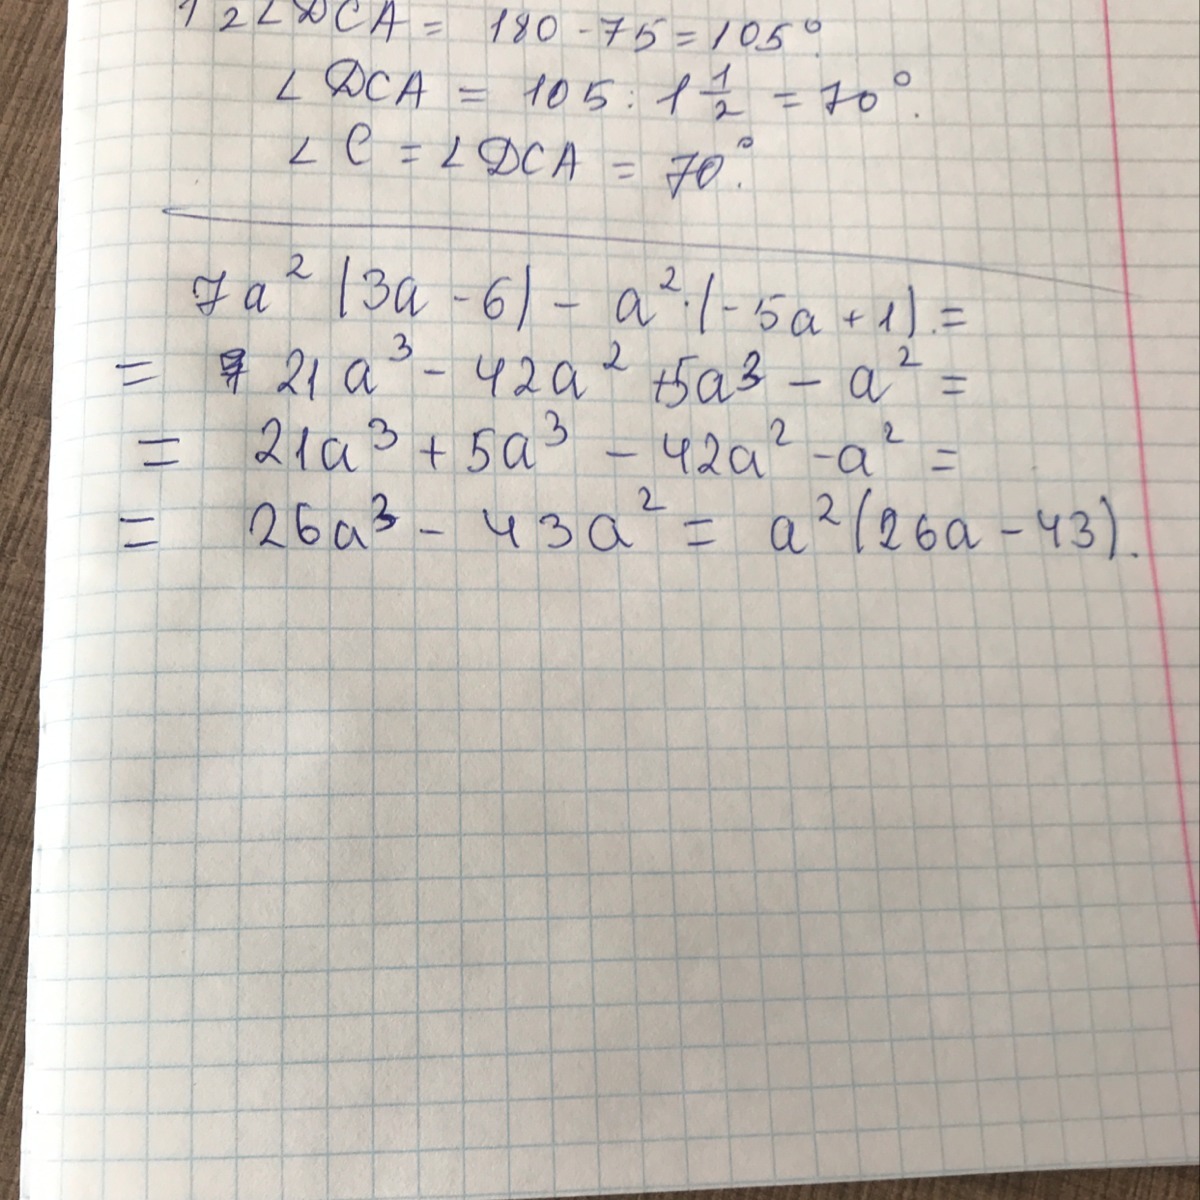 Упростите выражение a 3 2 a 5a. -6,1*2,5. 2*1 3/7. (5a-3b)^2-(3a-5b)^2. 2(A-5)-7(7-2a) ответ.